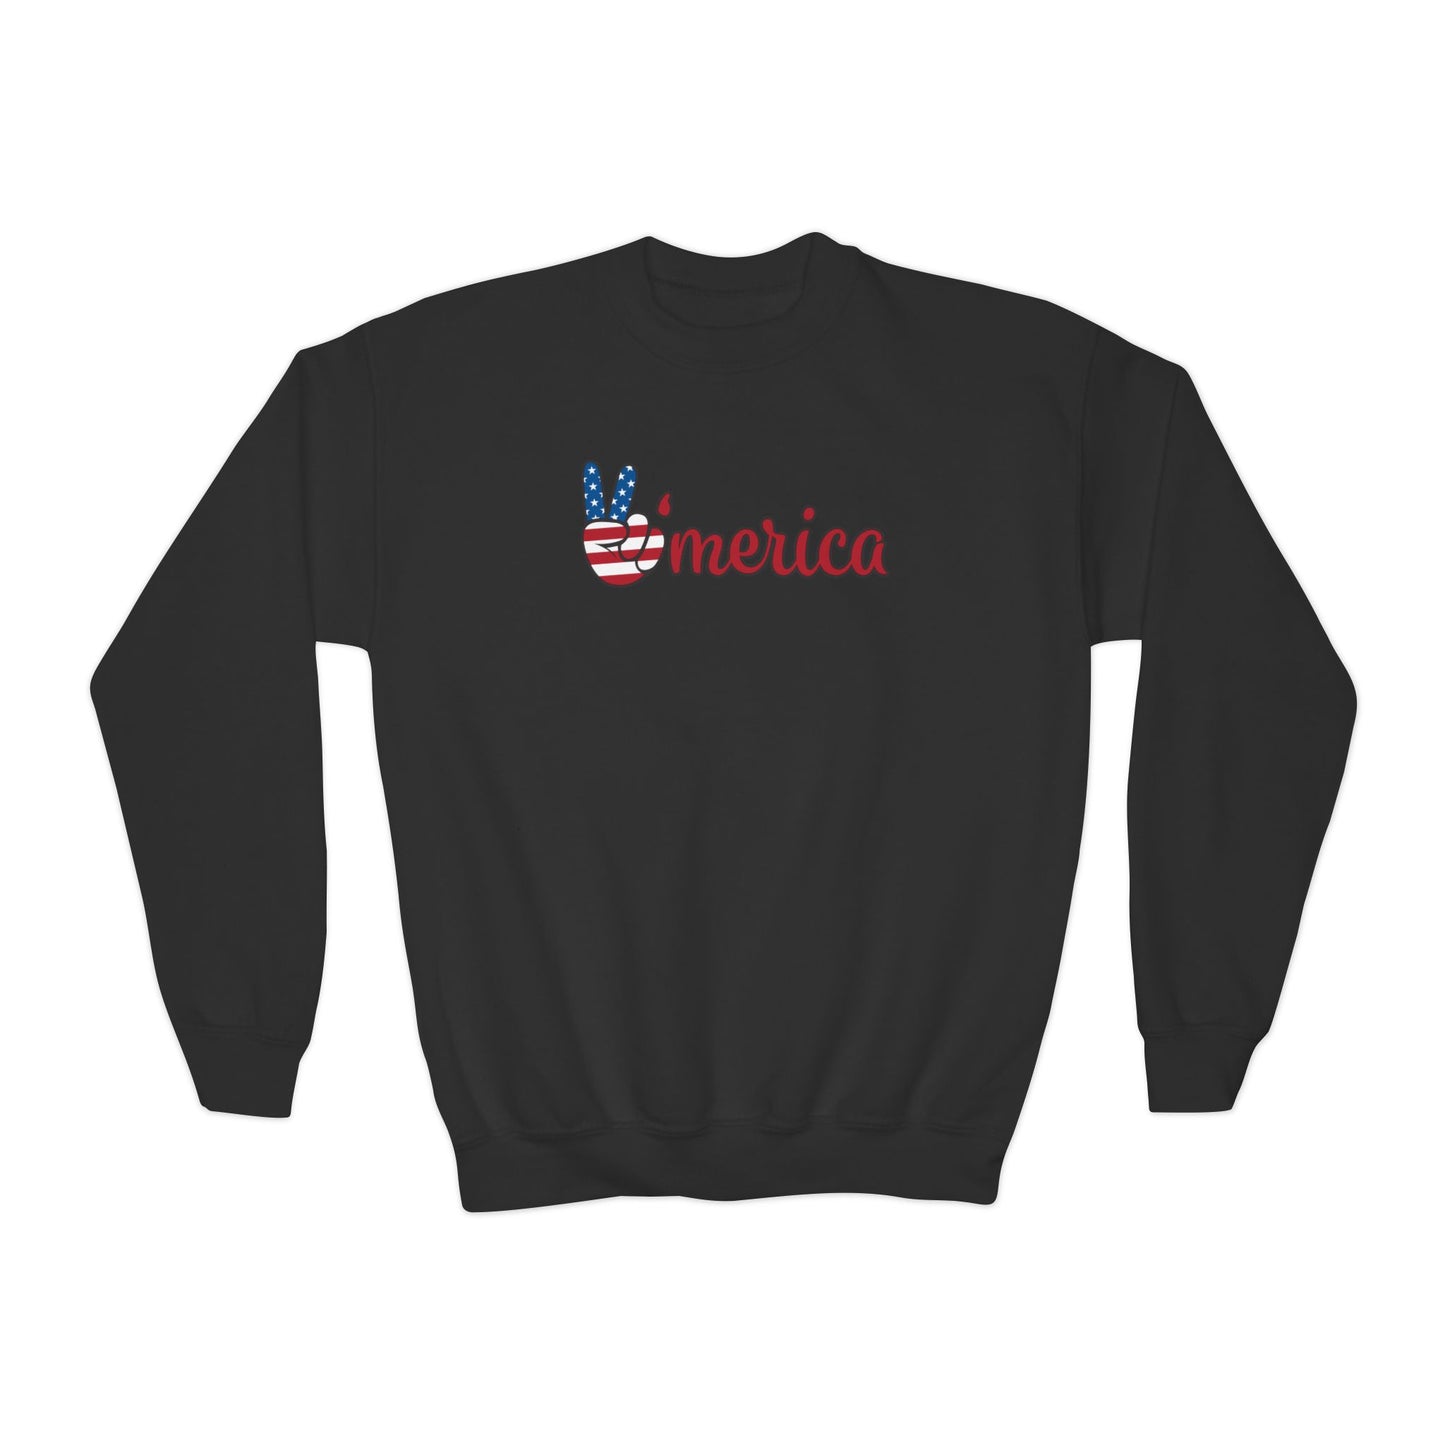 America Youth Sweatshirt